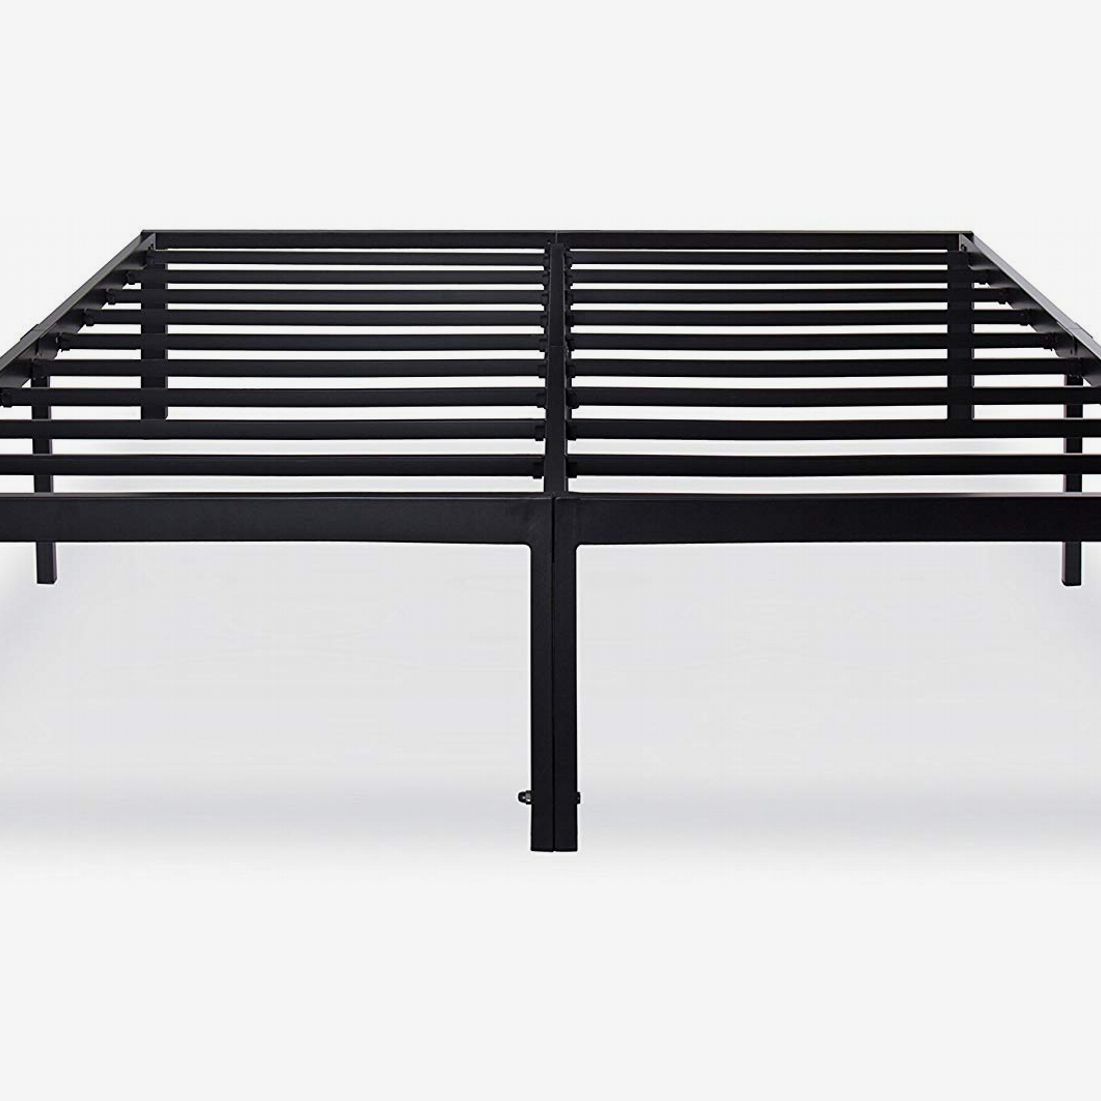 19 Best Metal Bed Frames 2020 The, Metal Bed Frame Bumpers